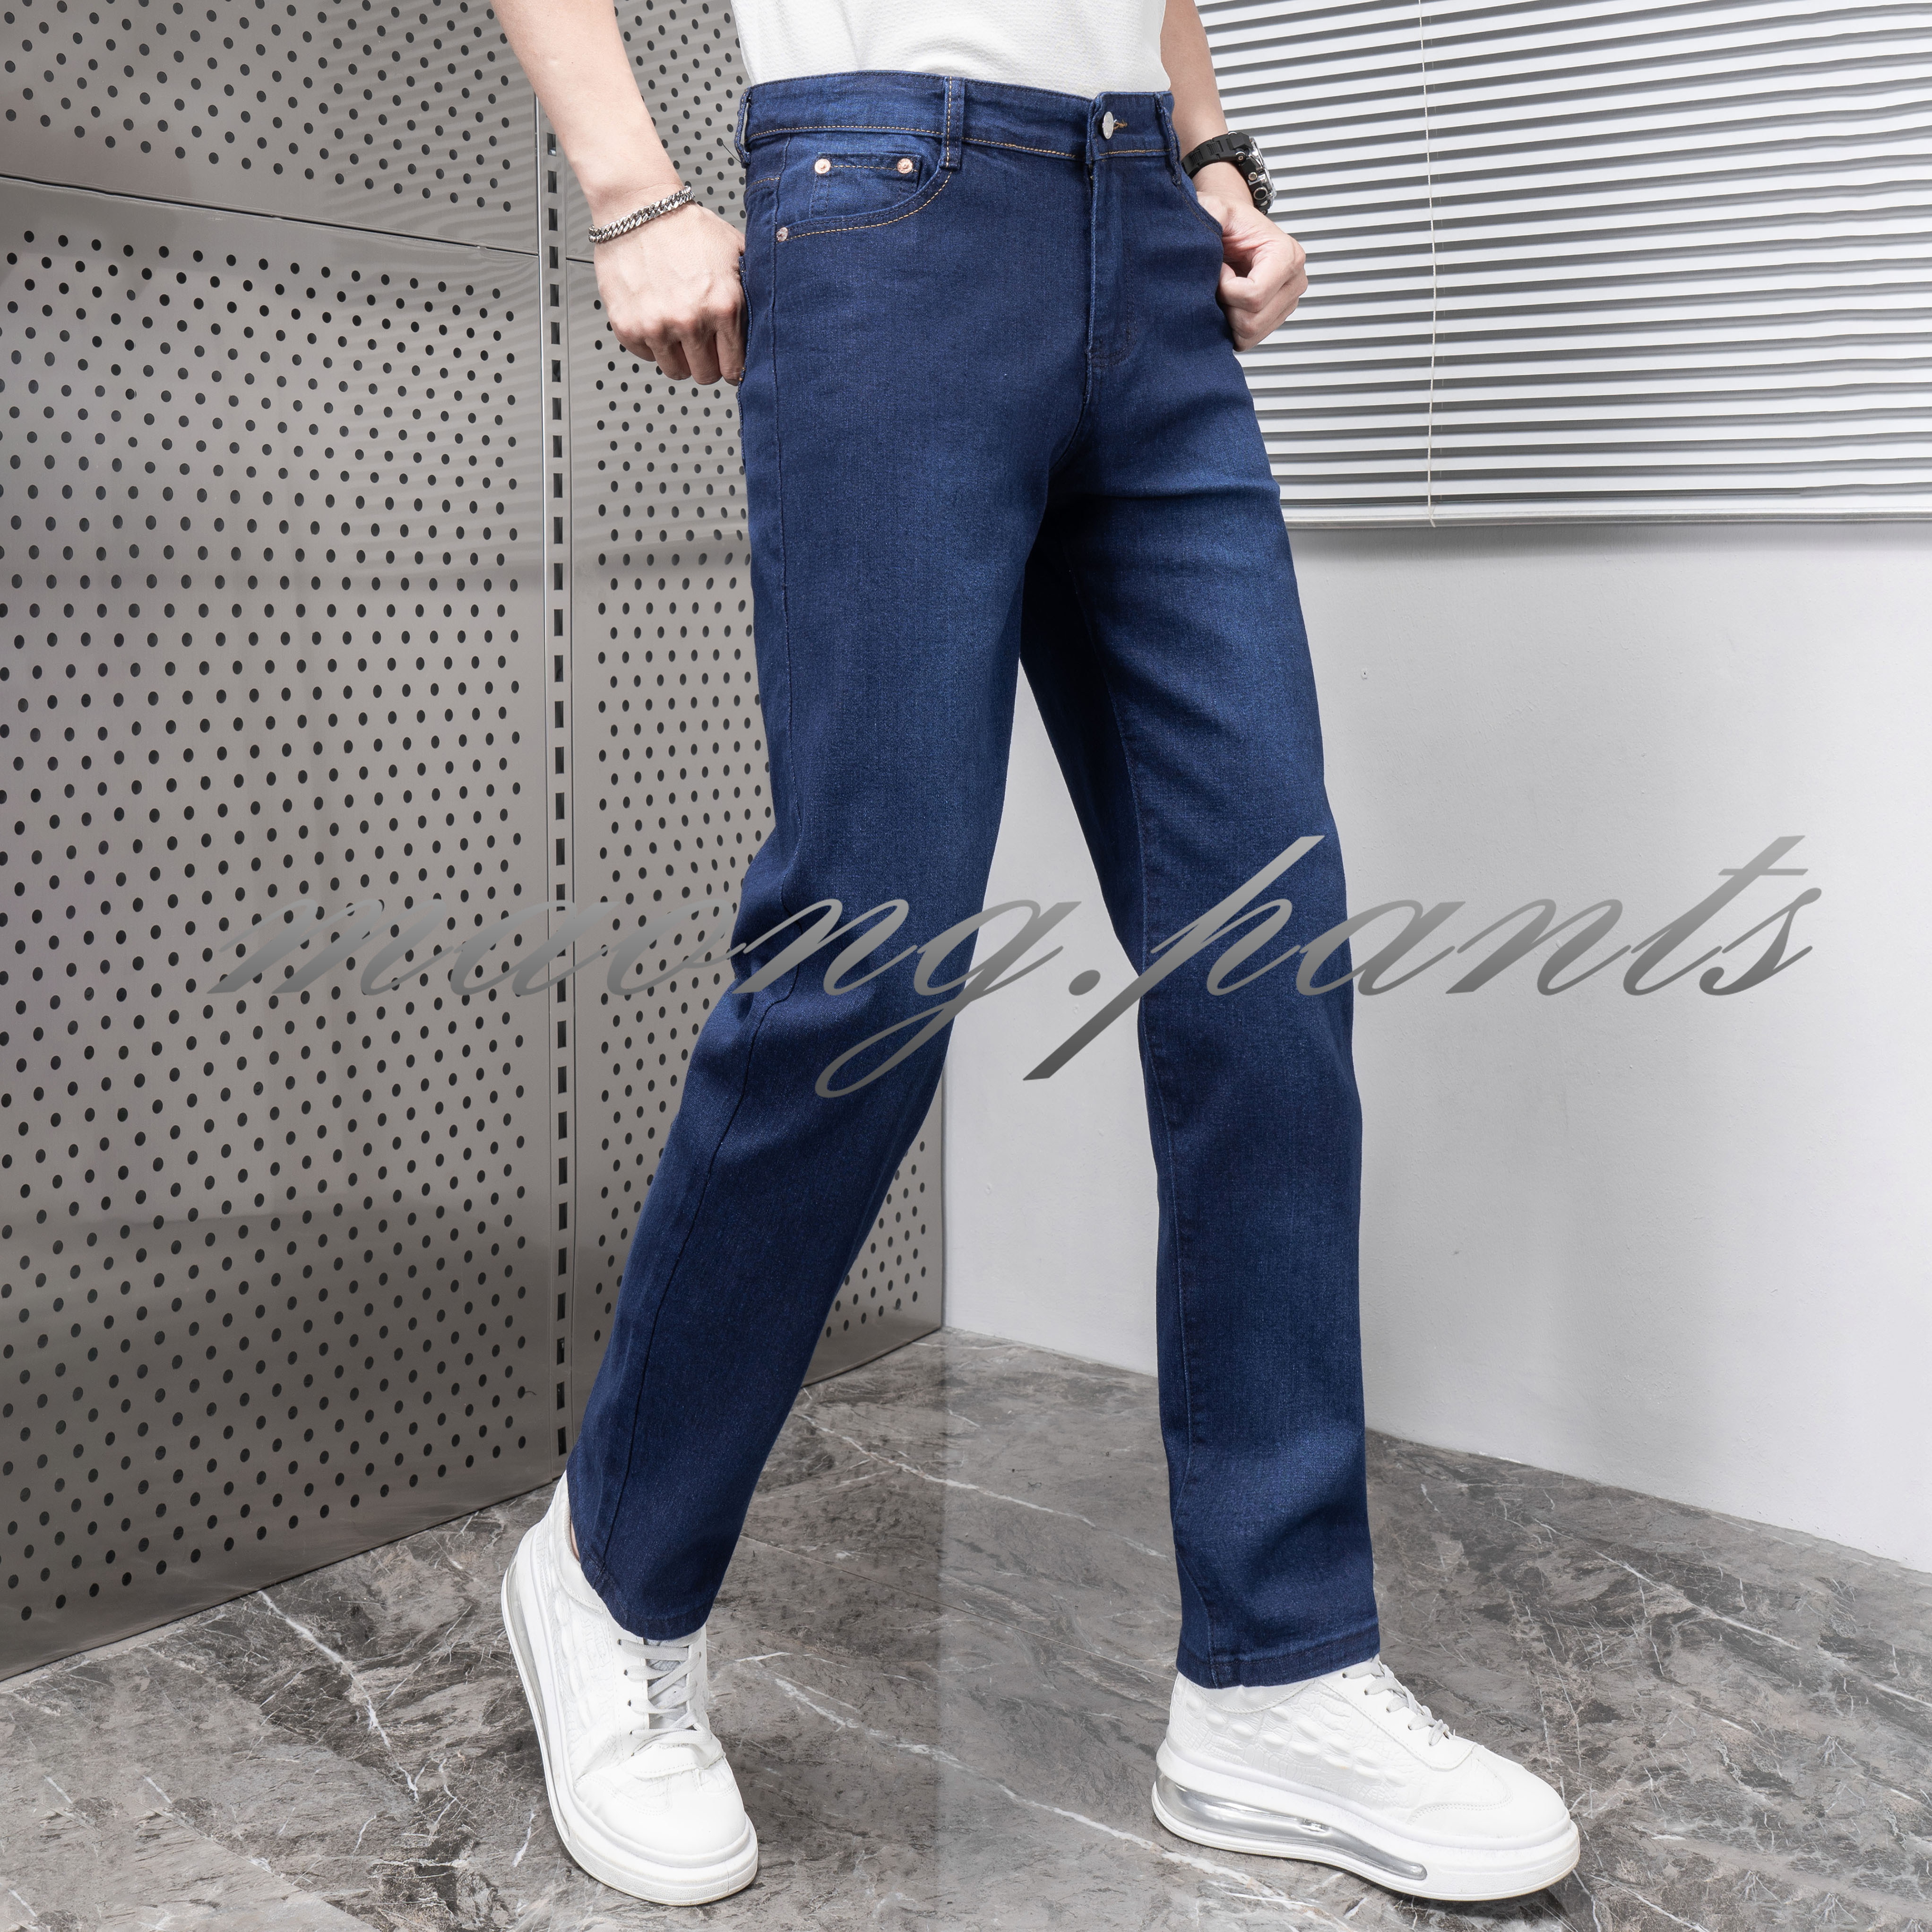 Shop Latest Denim Jeans for Men Online at a Great Deal – Crocodile-nextbuild.com.vn